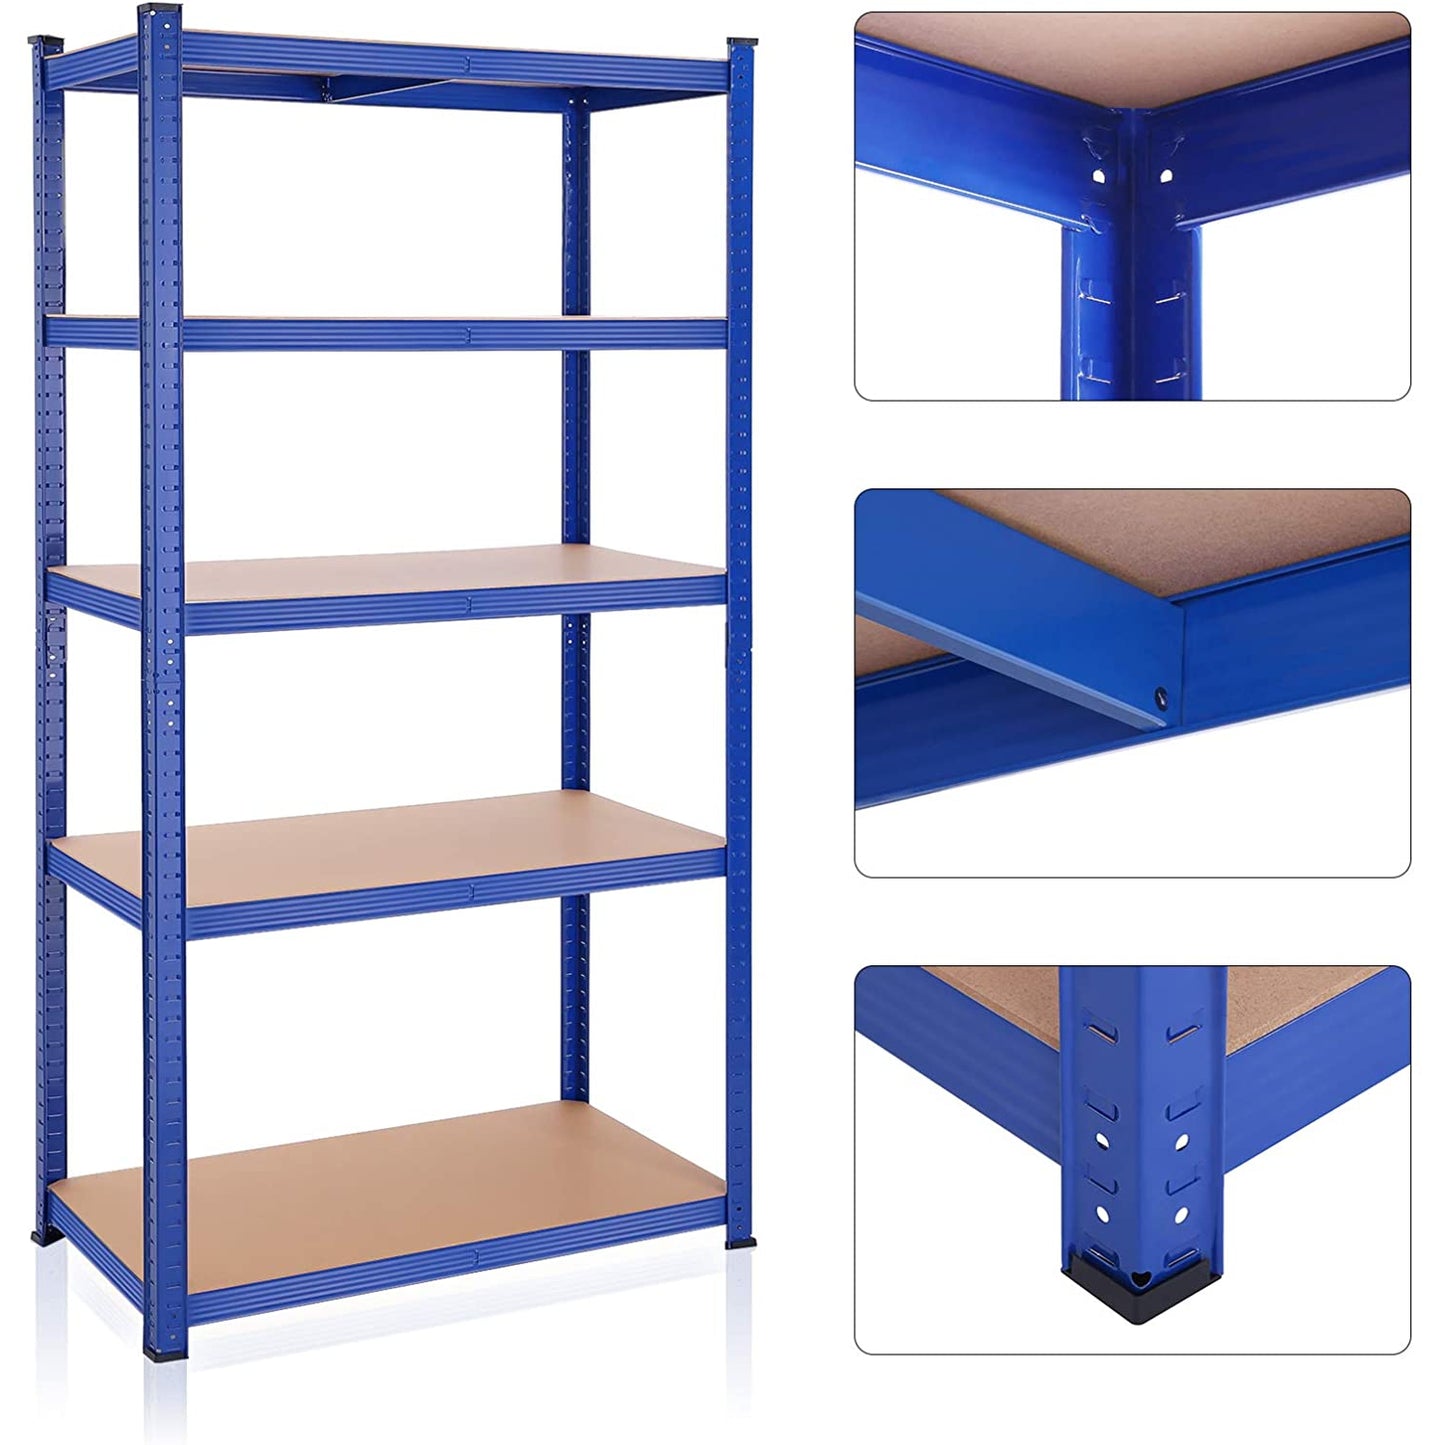 Nancy's Buckland Shelving unit - Workshop - Adjustable - Blue - Metal - MDF - 200 x 100 x 50 cm